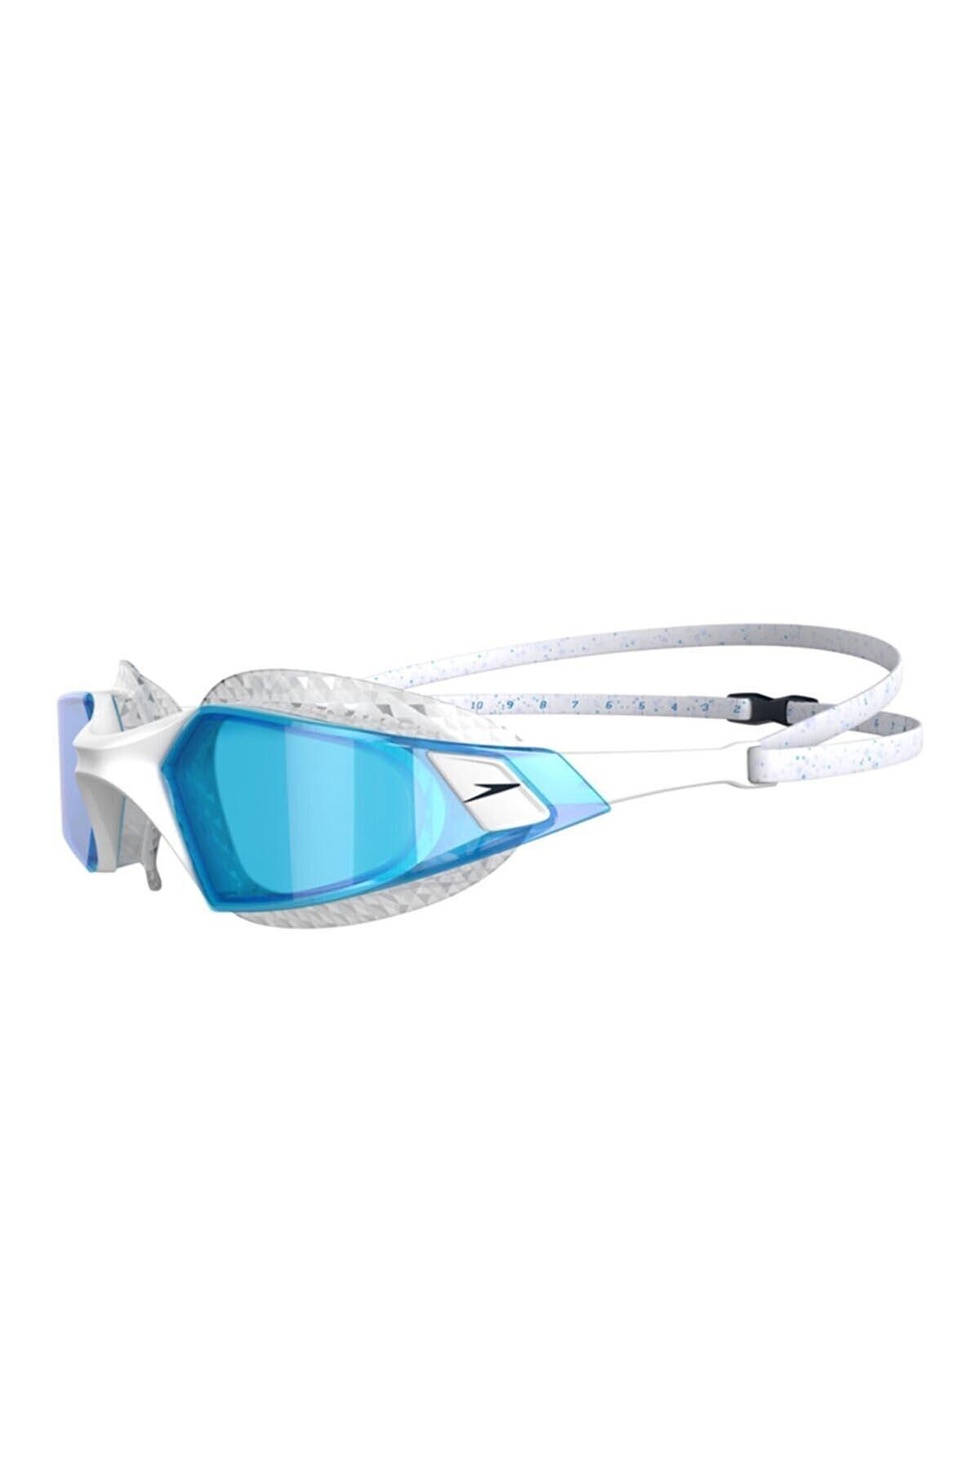 Aquapulse Pro Gog Au Wht/Blu Gözlük